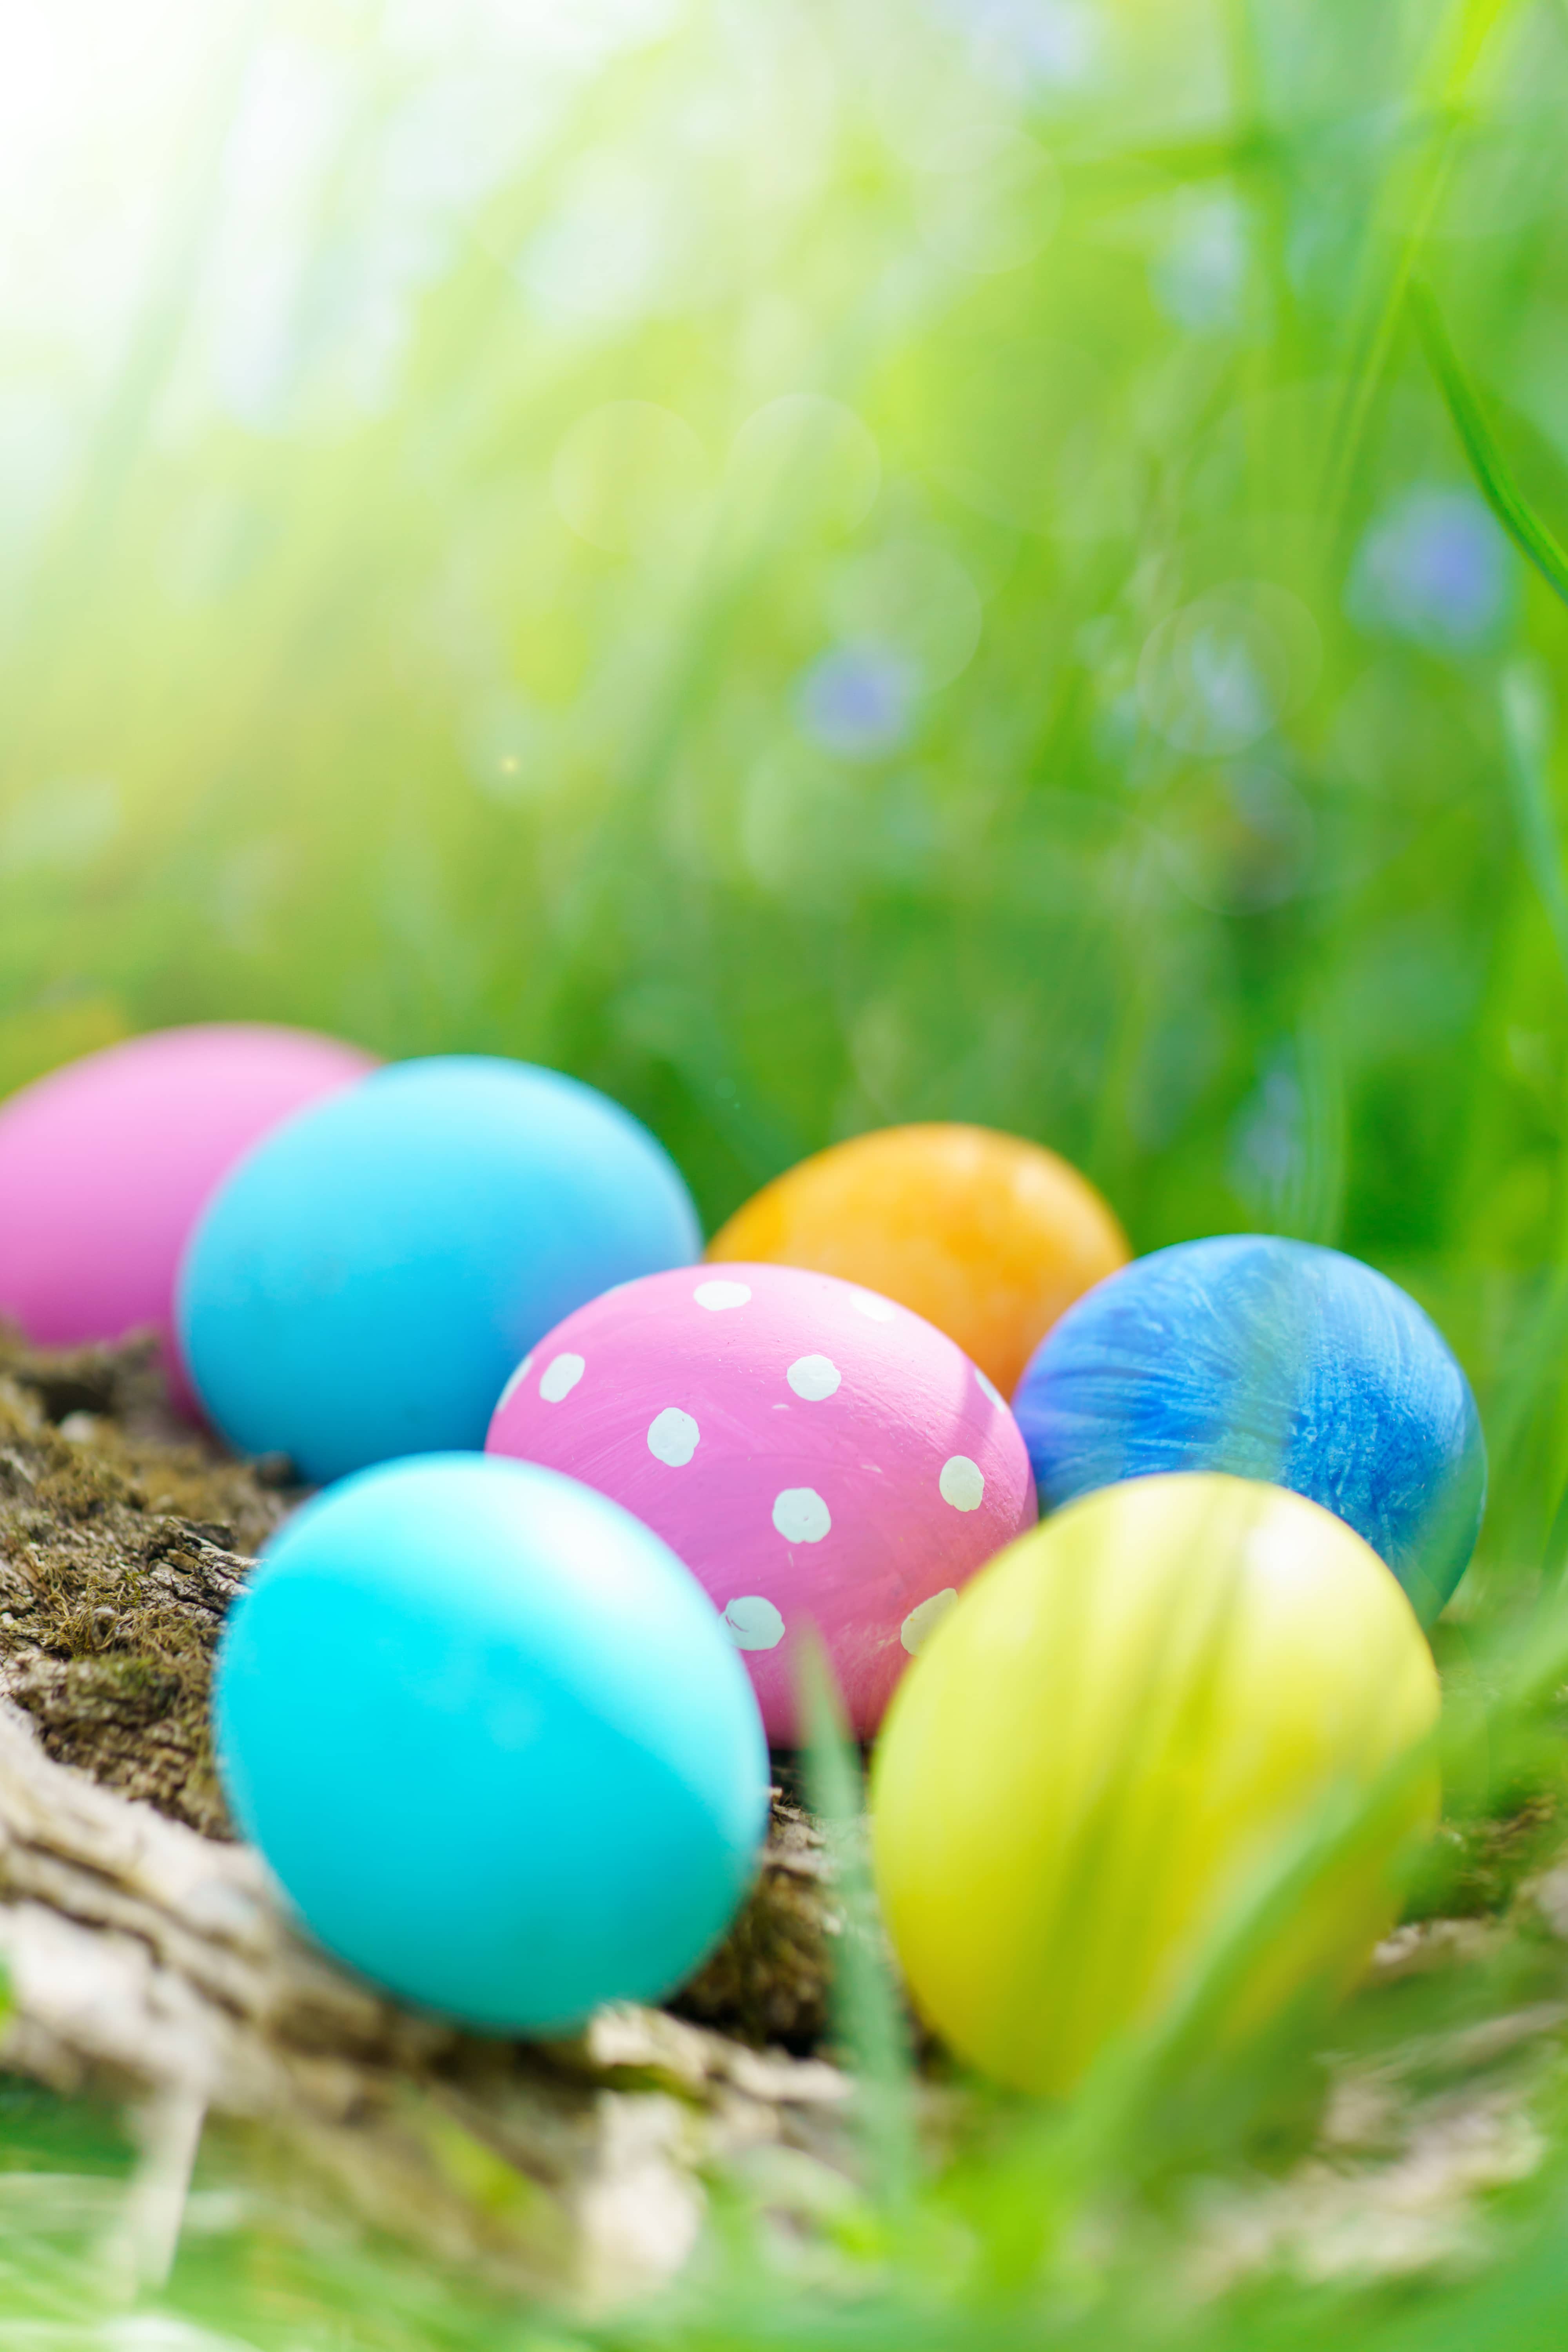 Easter Egg Hunt for local kids on Saturday April 16 at Washington Park